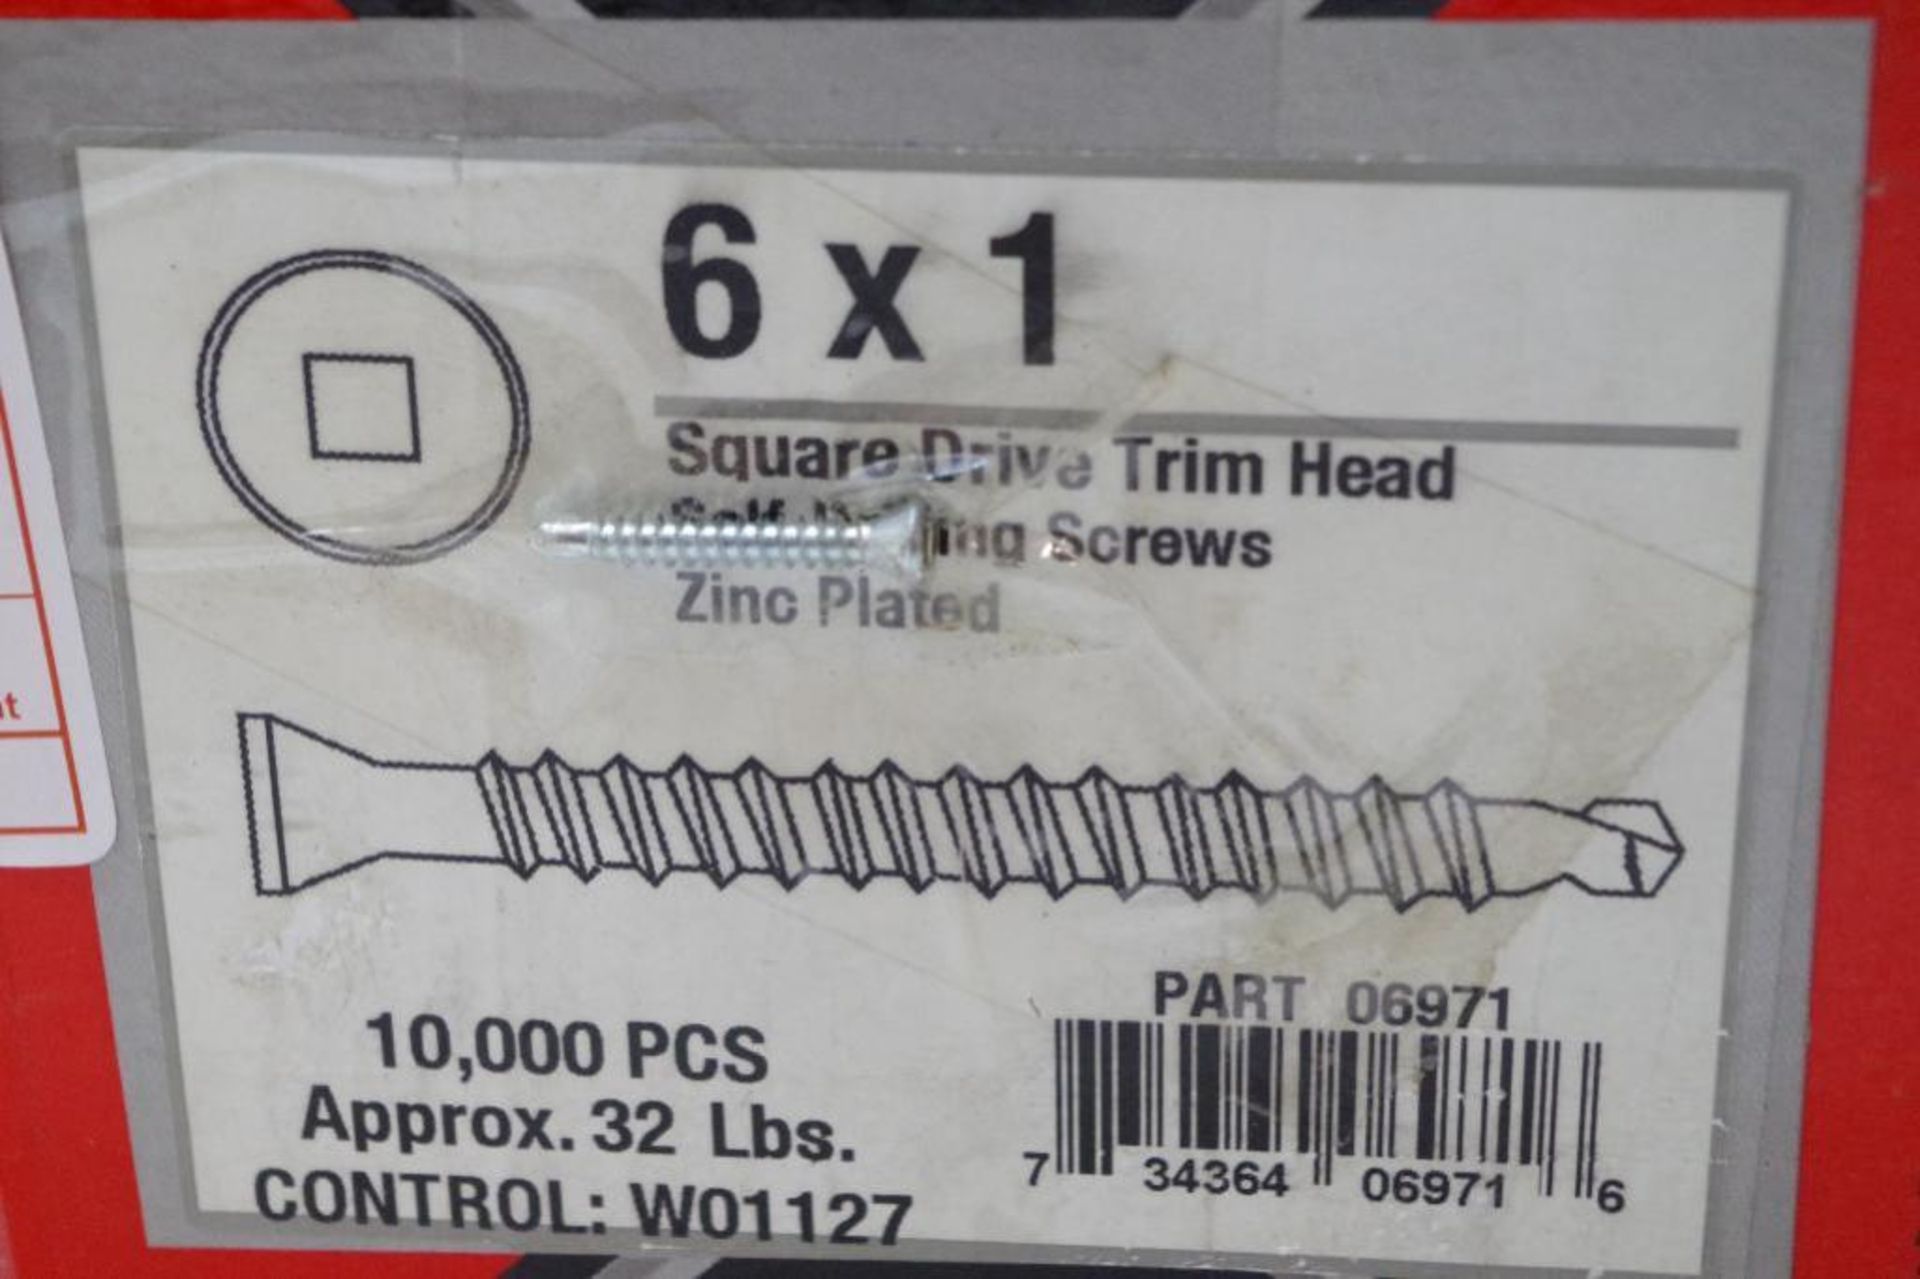 Box of Square Drive Trim Head Screws 6x1 (1 Box of 10,000) - Image 3 of 3